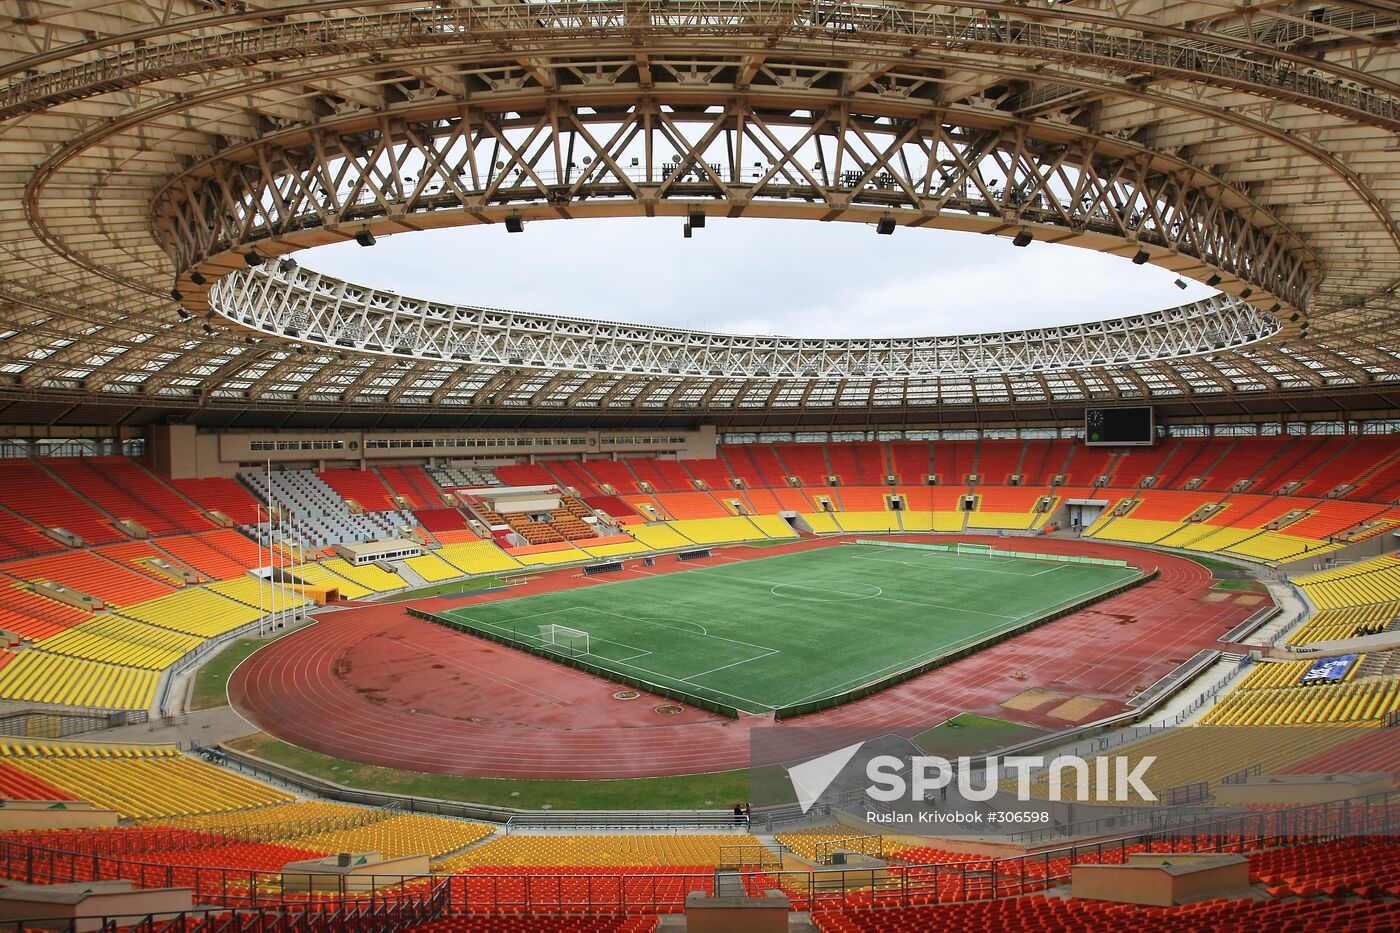 Grand sports arena of the Luzhniki Olympic complex